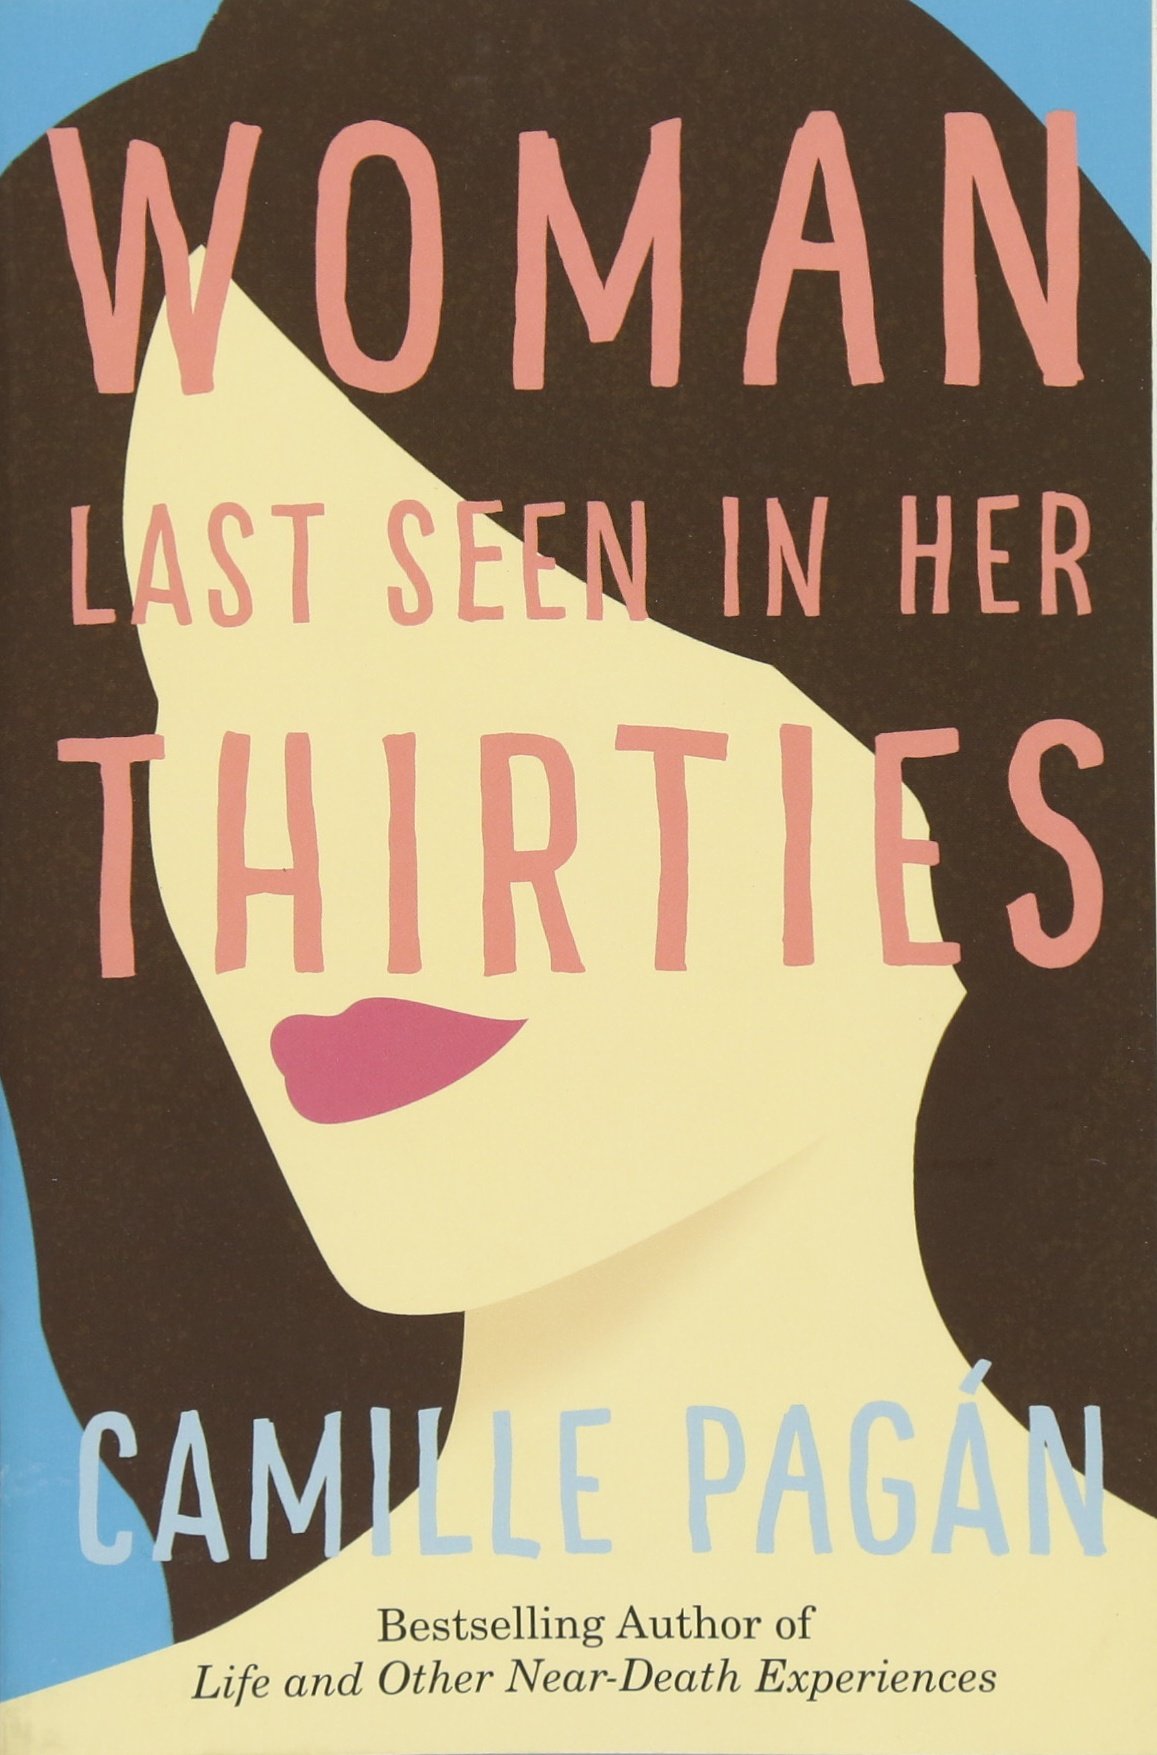 Woman Last Seen in Her Thirties (Goodreads)